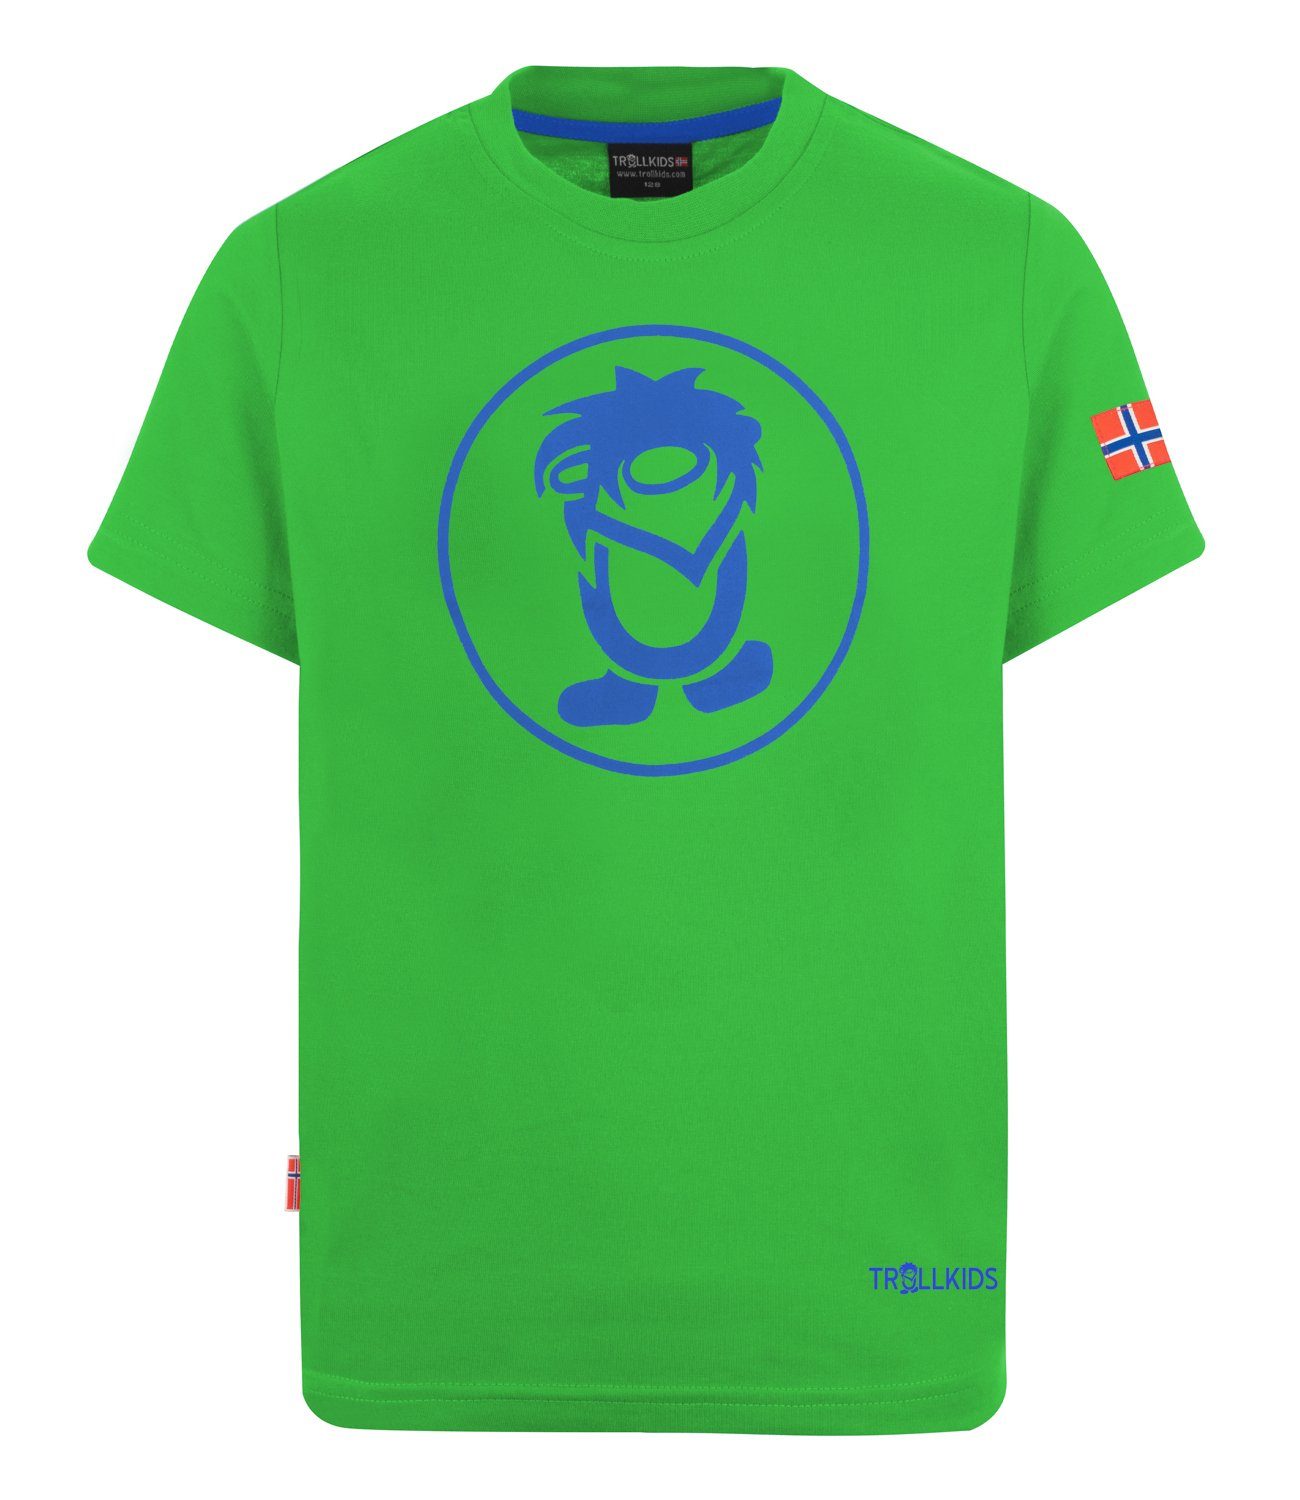 Hellgrün/Blau Troll TROLLKIDS T-Shirt